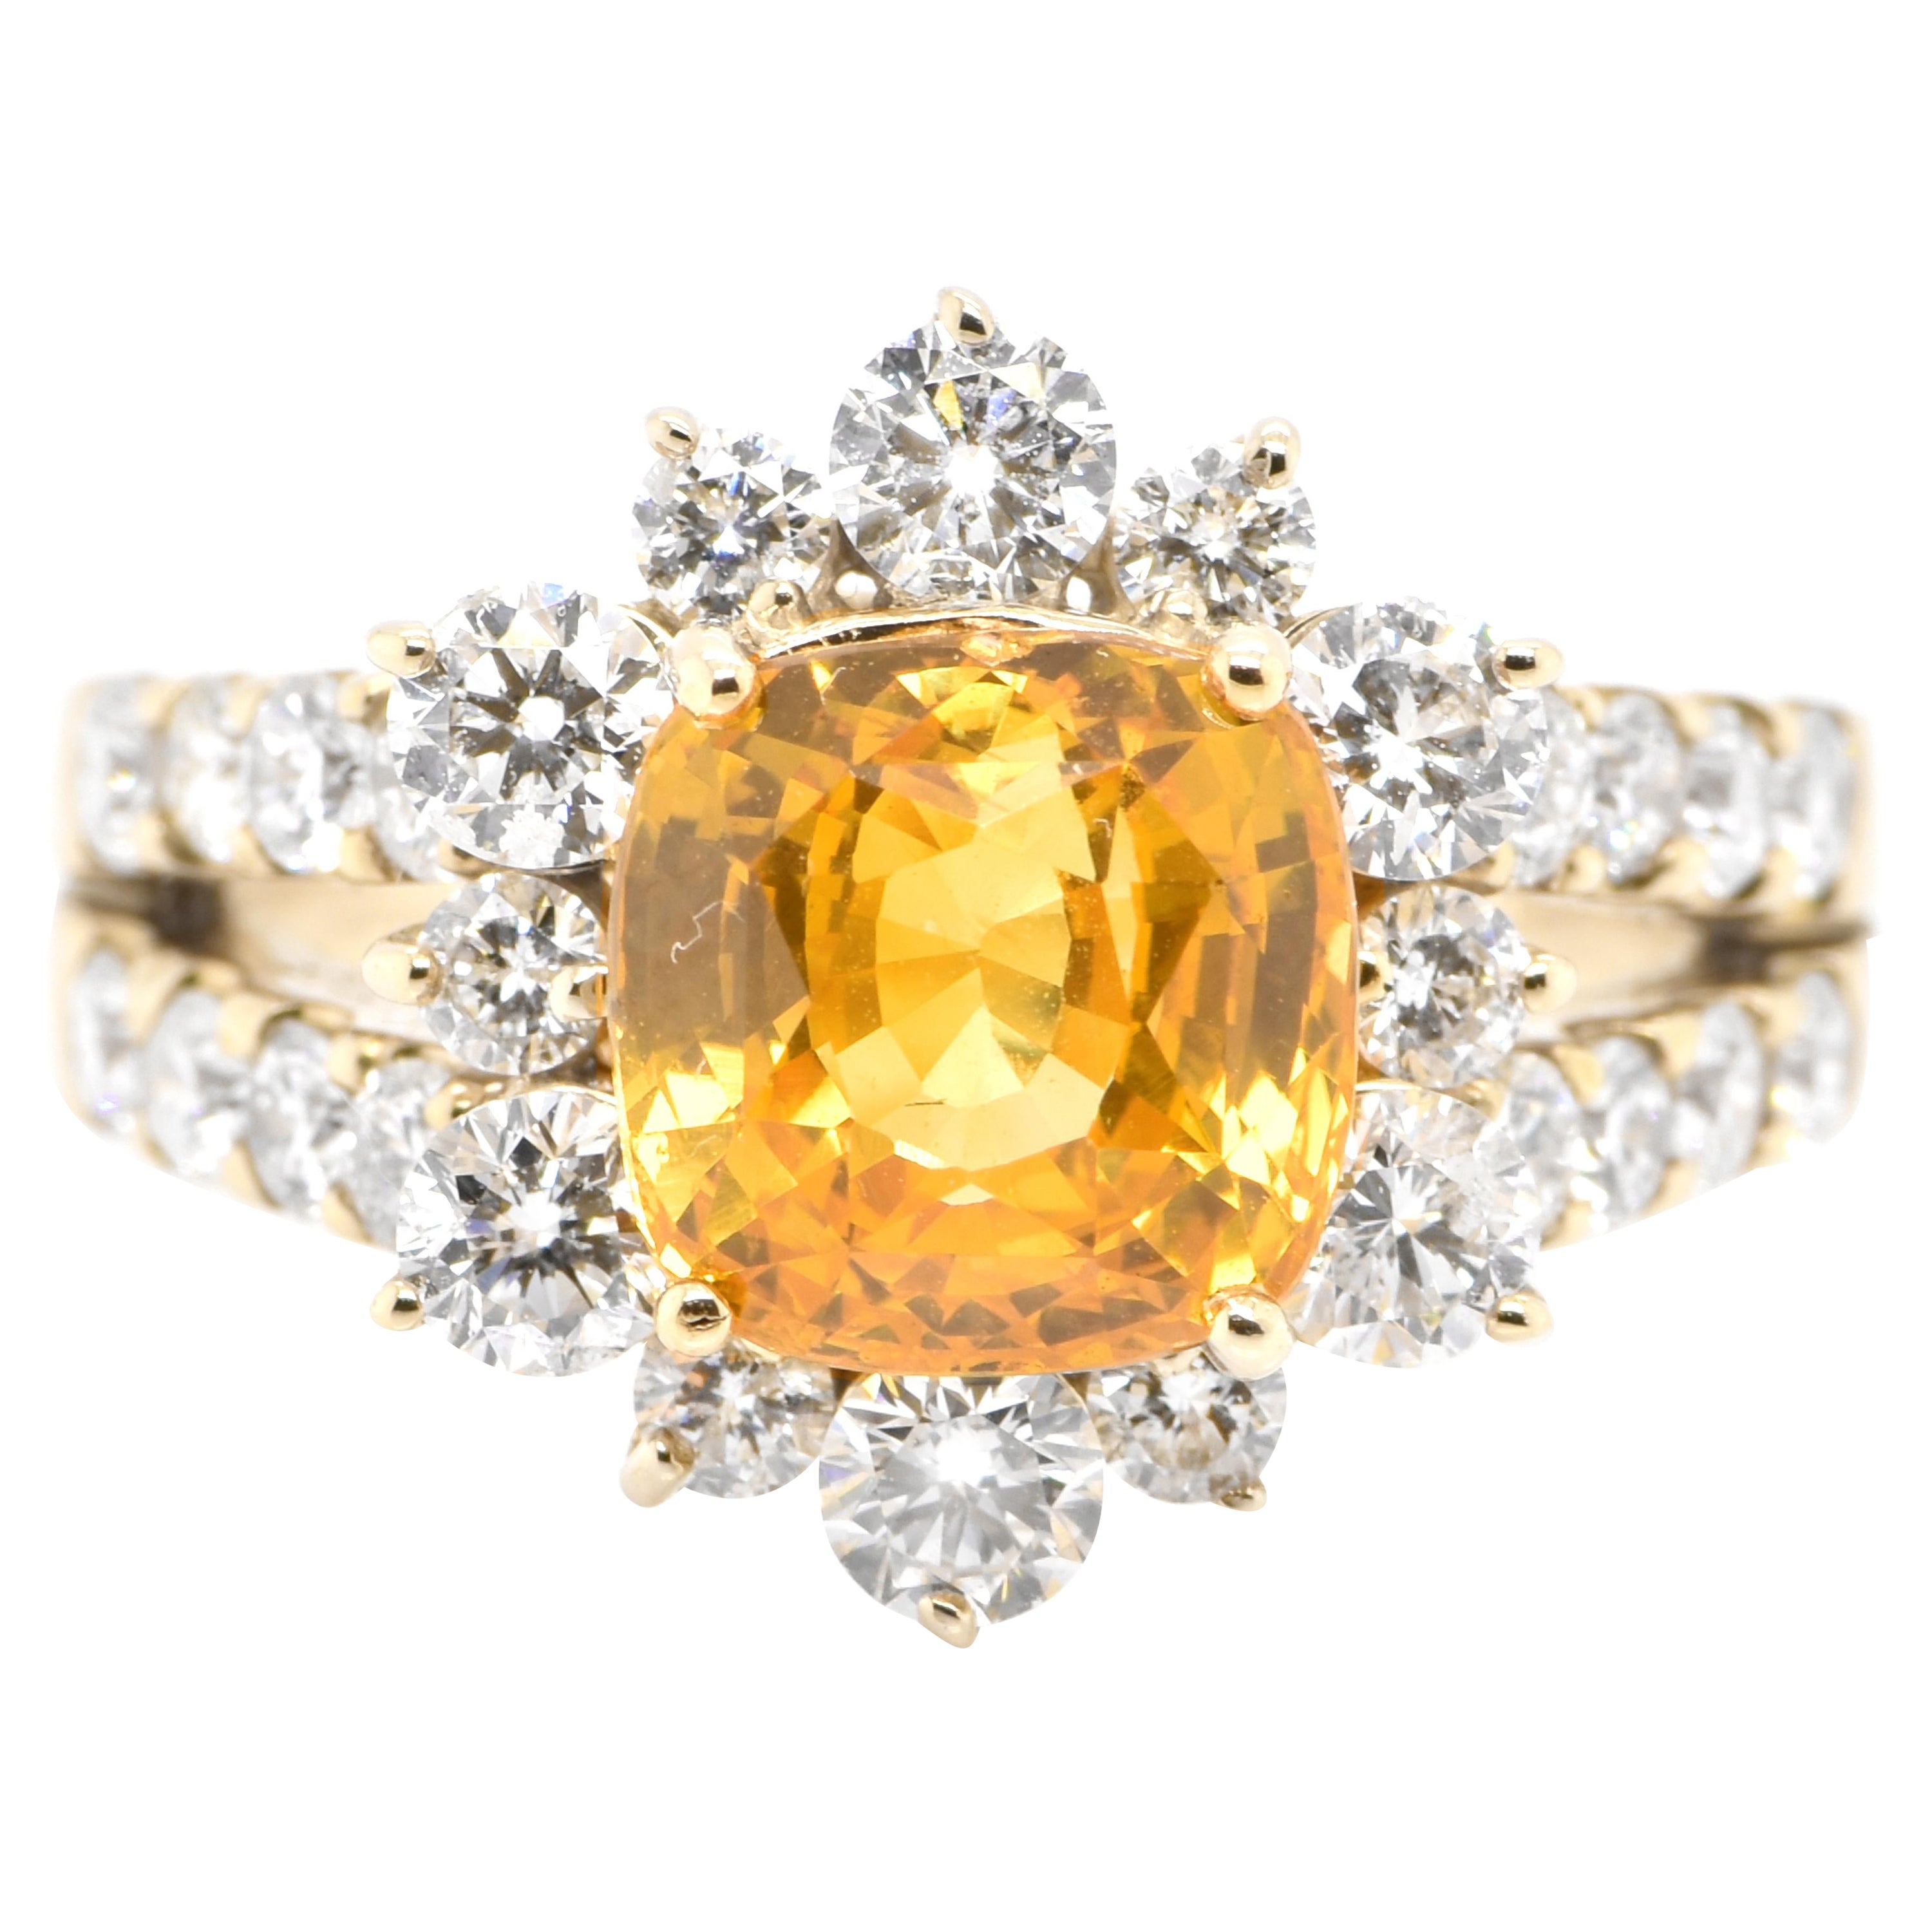 3.57 Carat Natural Yellow Sapphire and Diamond Ring Set in 18 Karat Gold